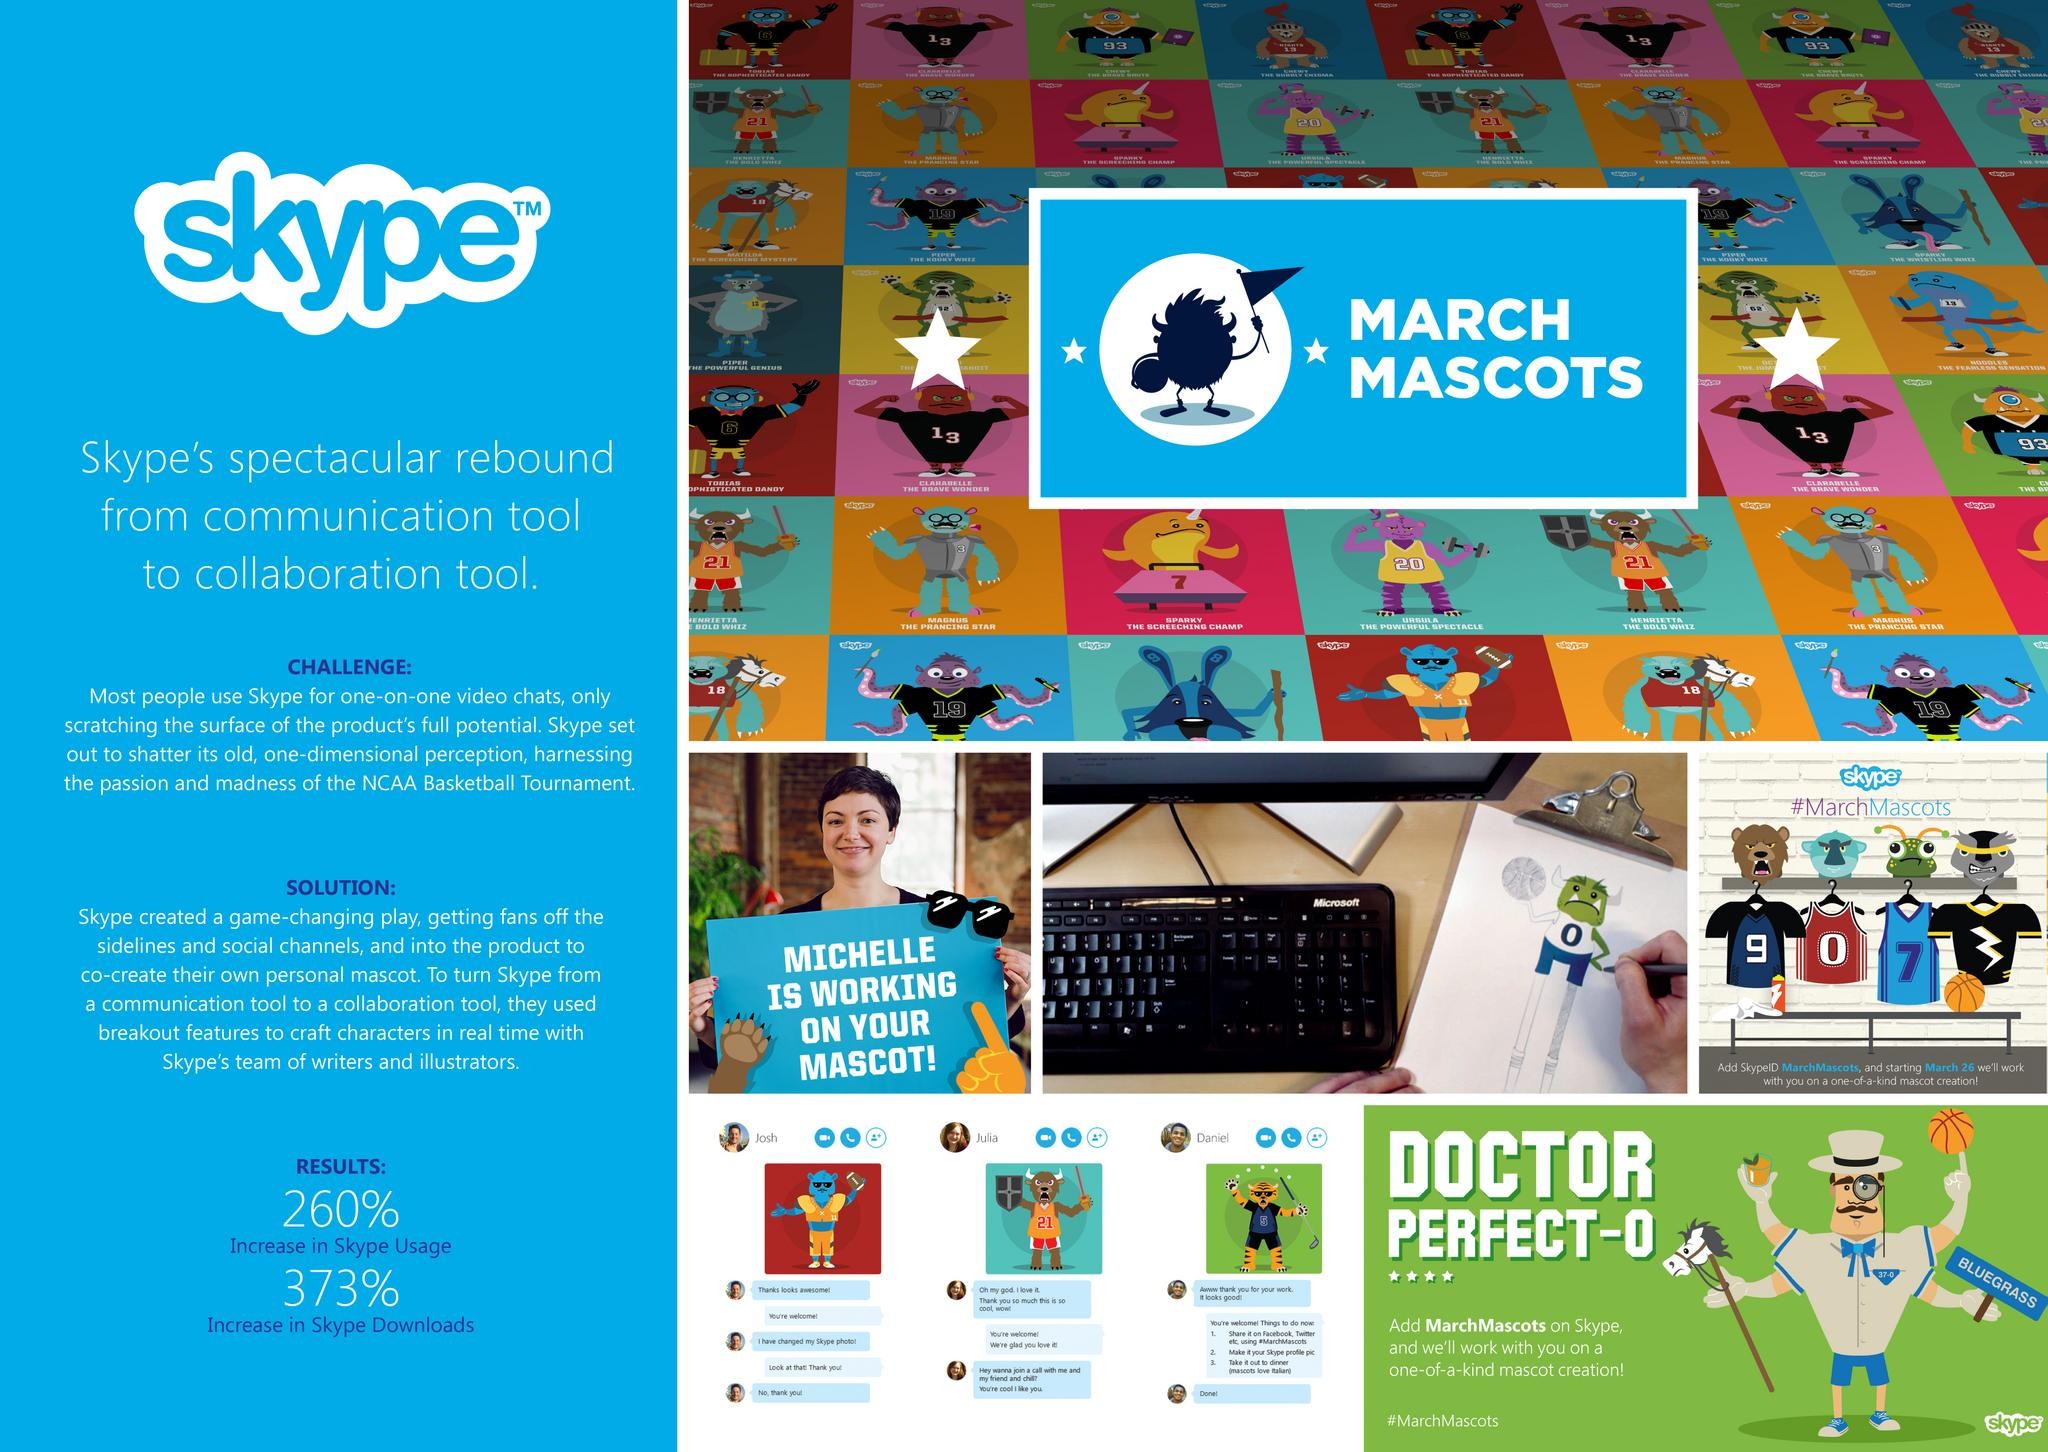 Skype Mascots